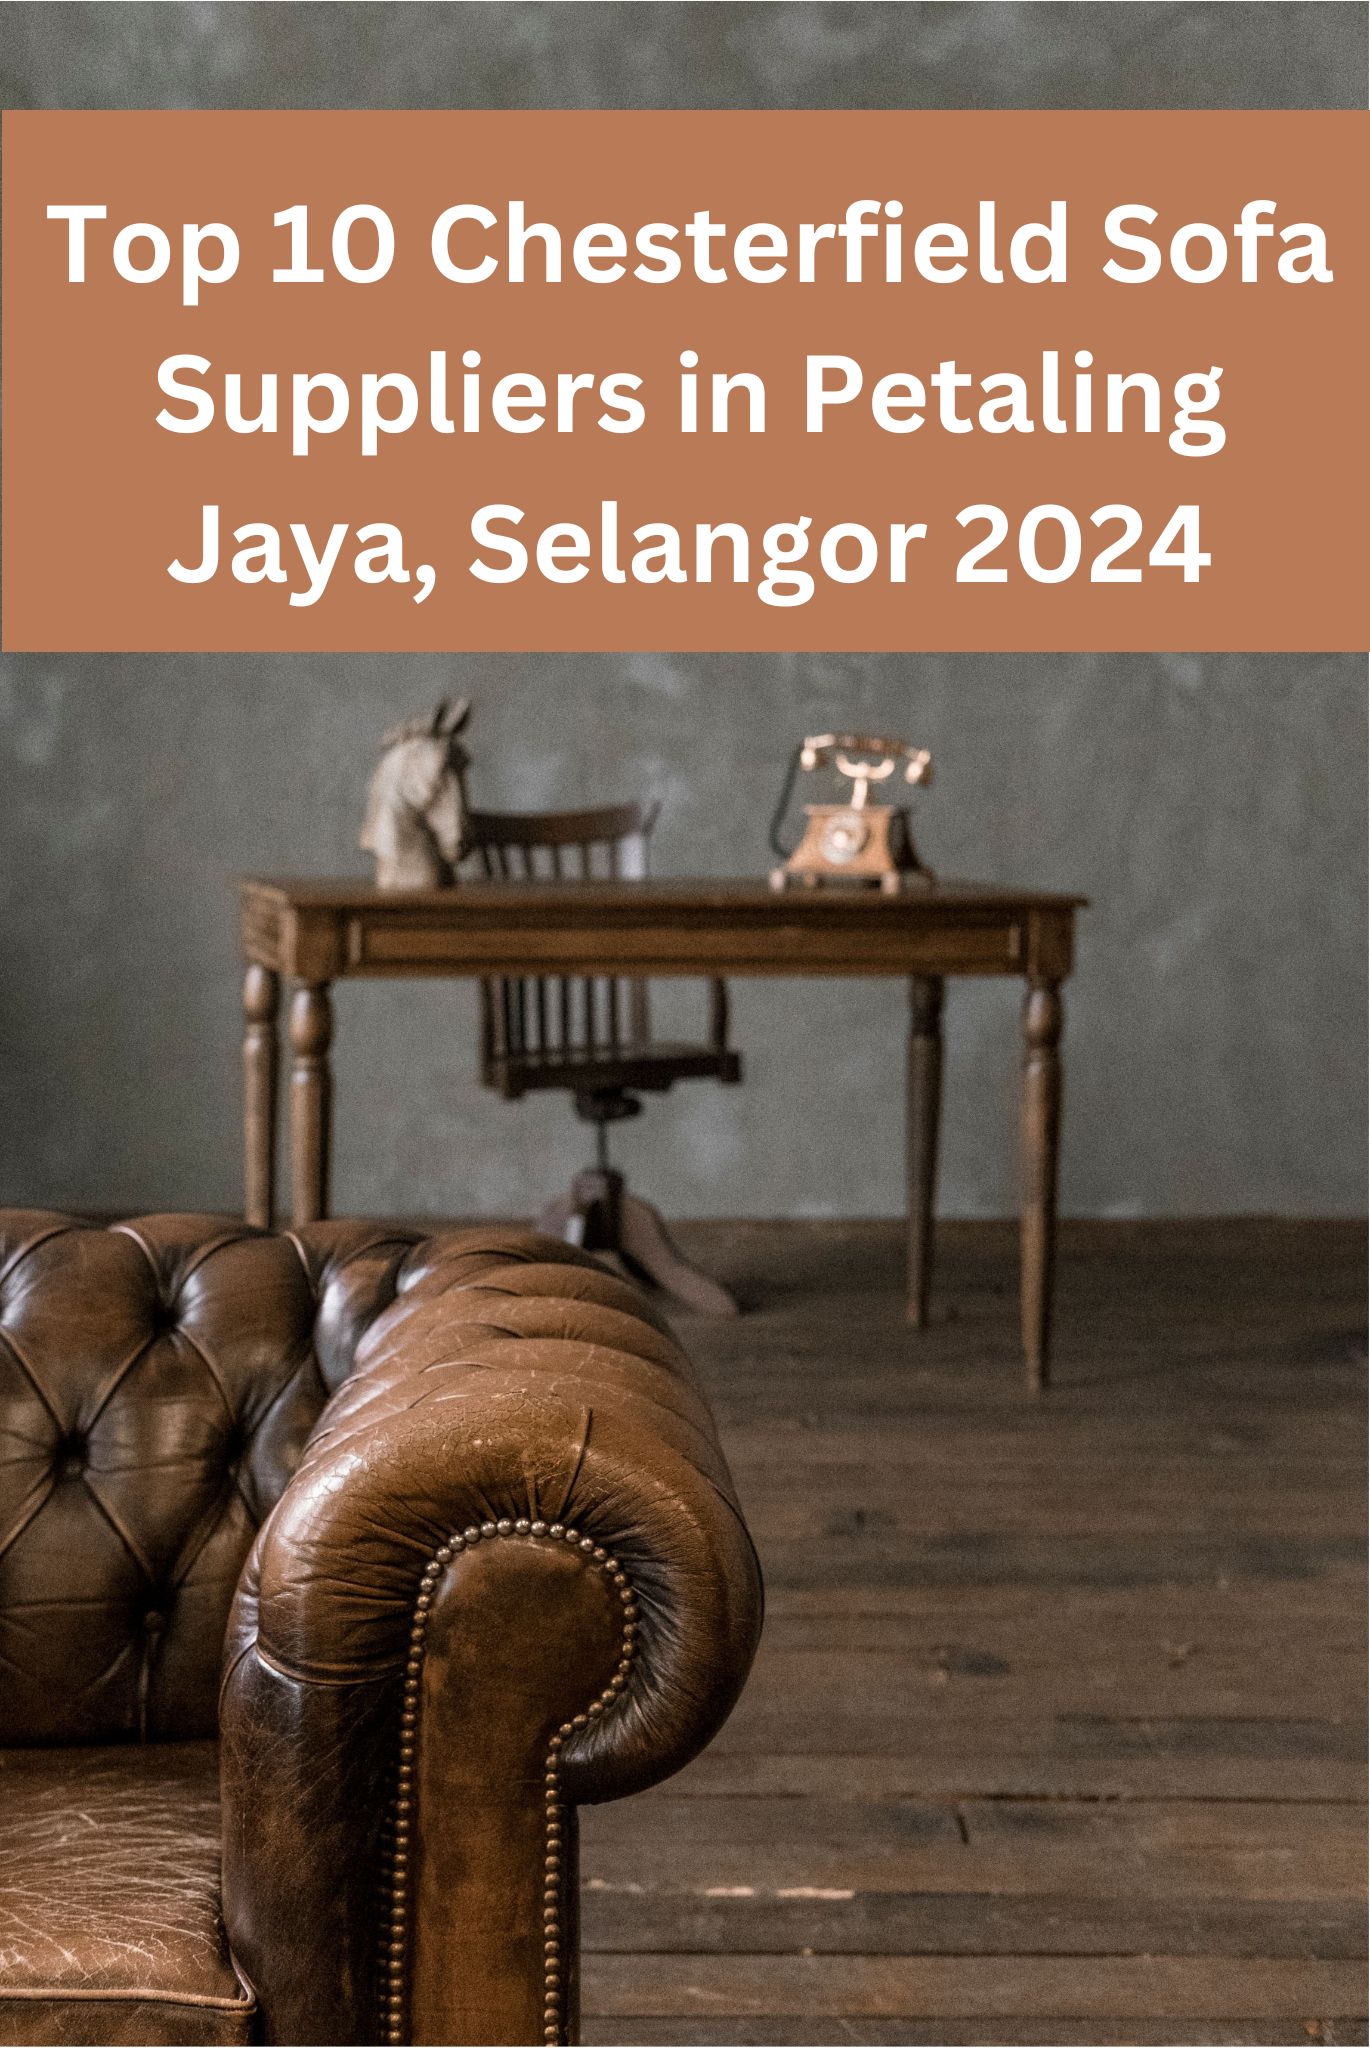 Top 10 Chesterfield Sofa Suppliers in Petaling Jaya, Selangor 2024